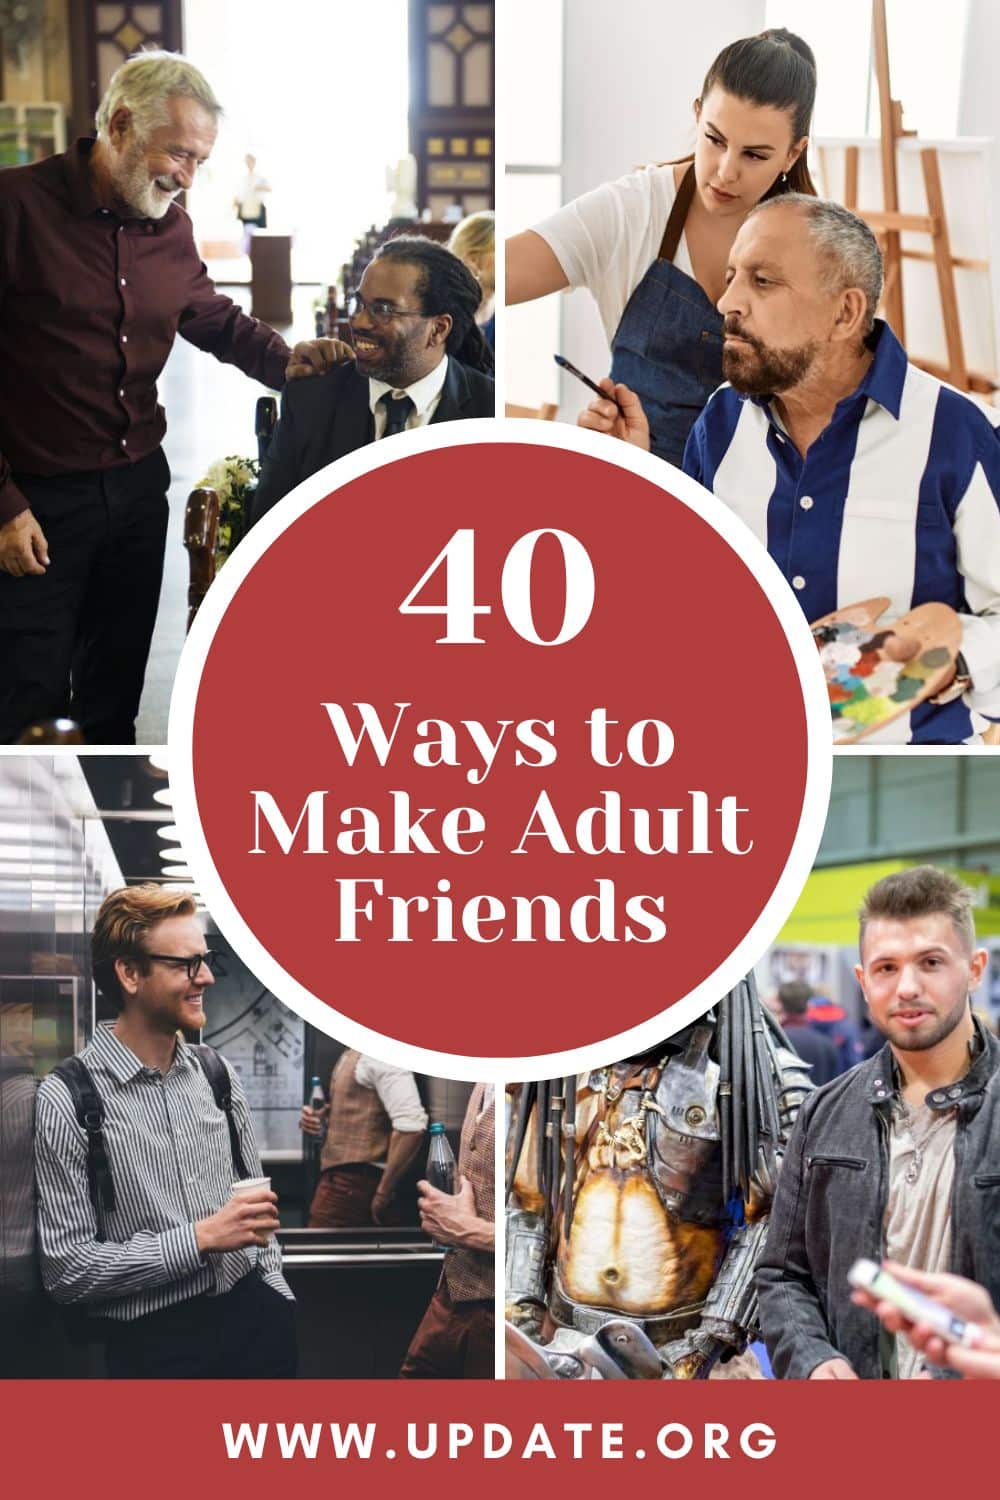 40 Ways to Make Adult Friends pinterest image.